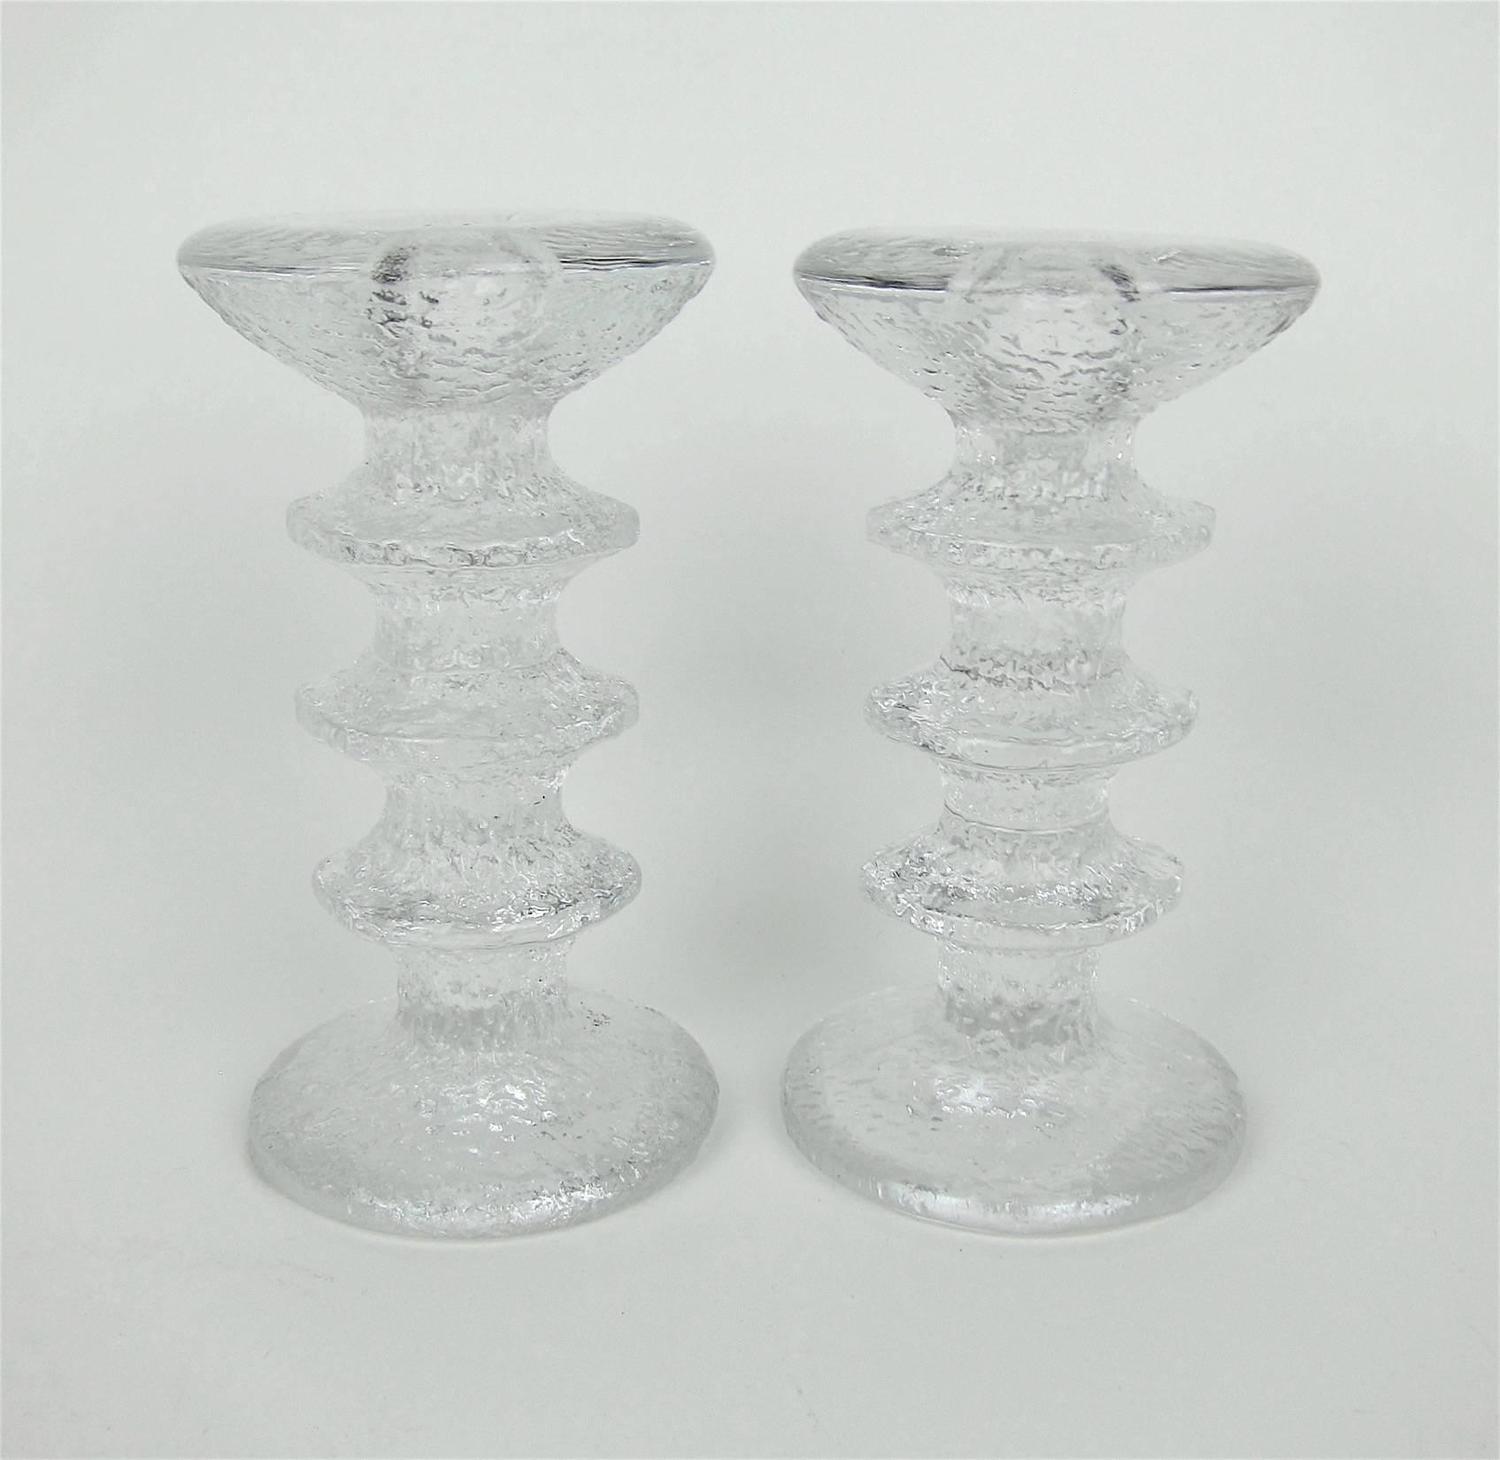 Iittala Festivo Glass Candle Holders Designed By Timo Sarpaneva Of